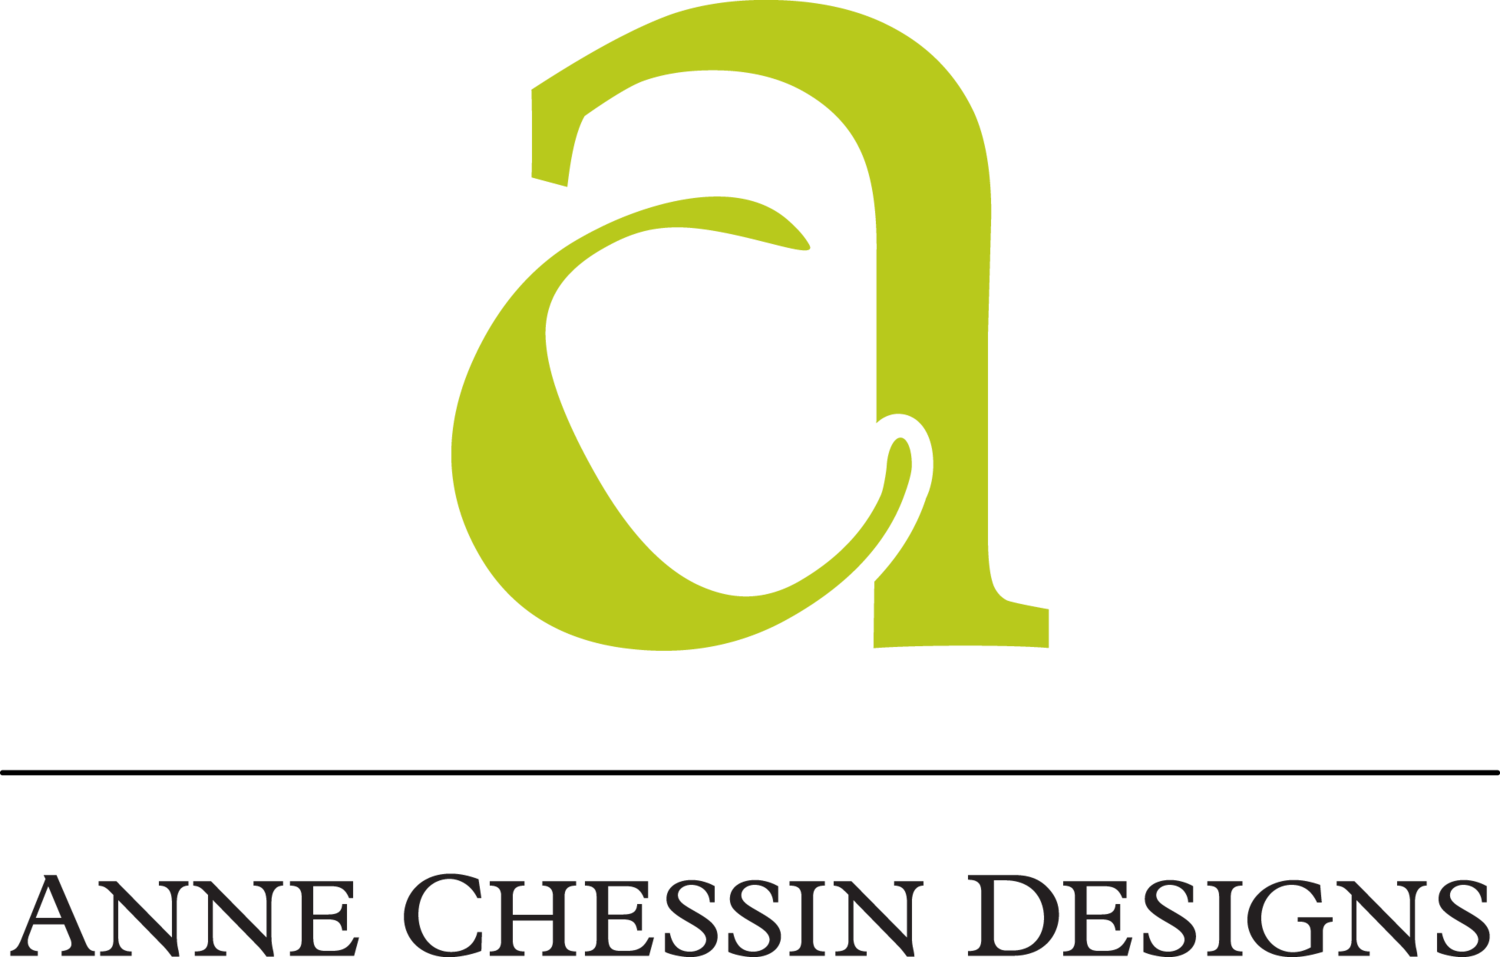 Anne Chessin Designs